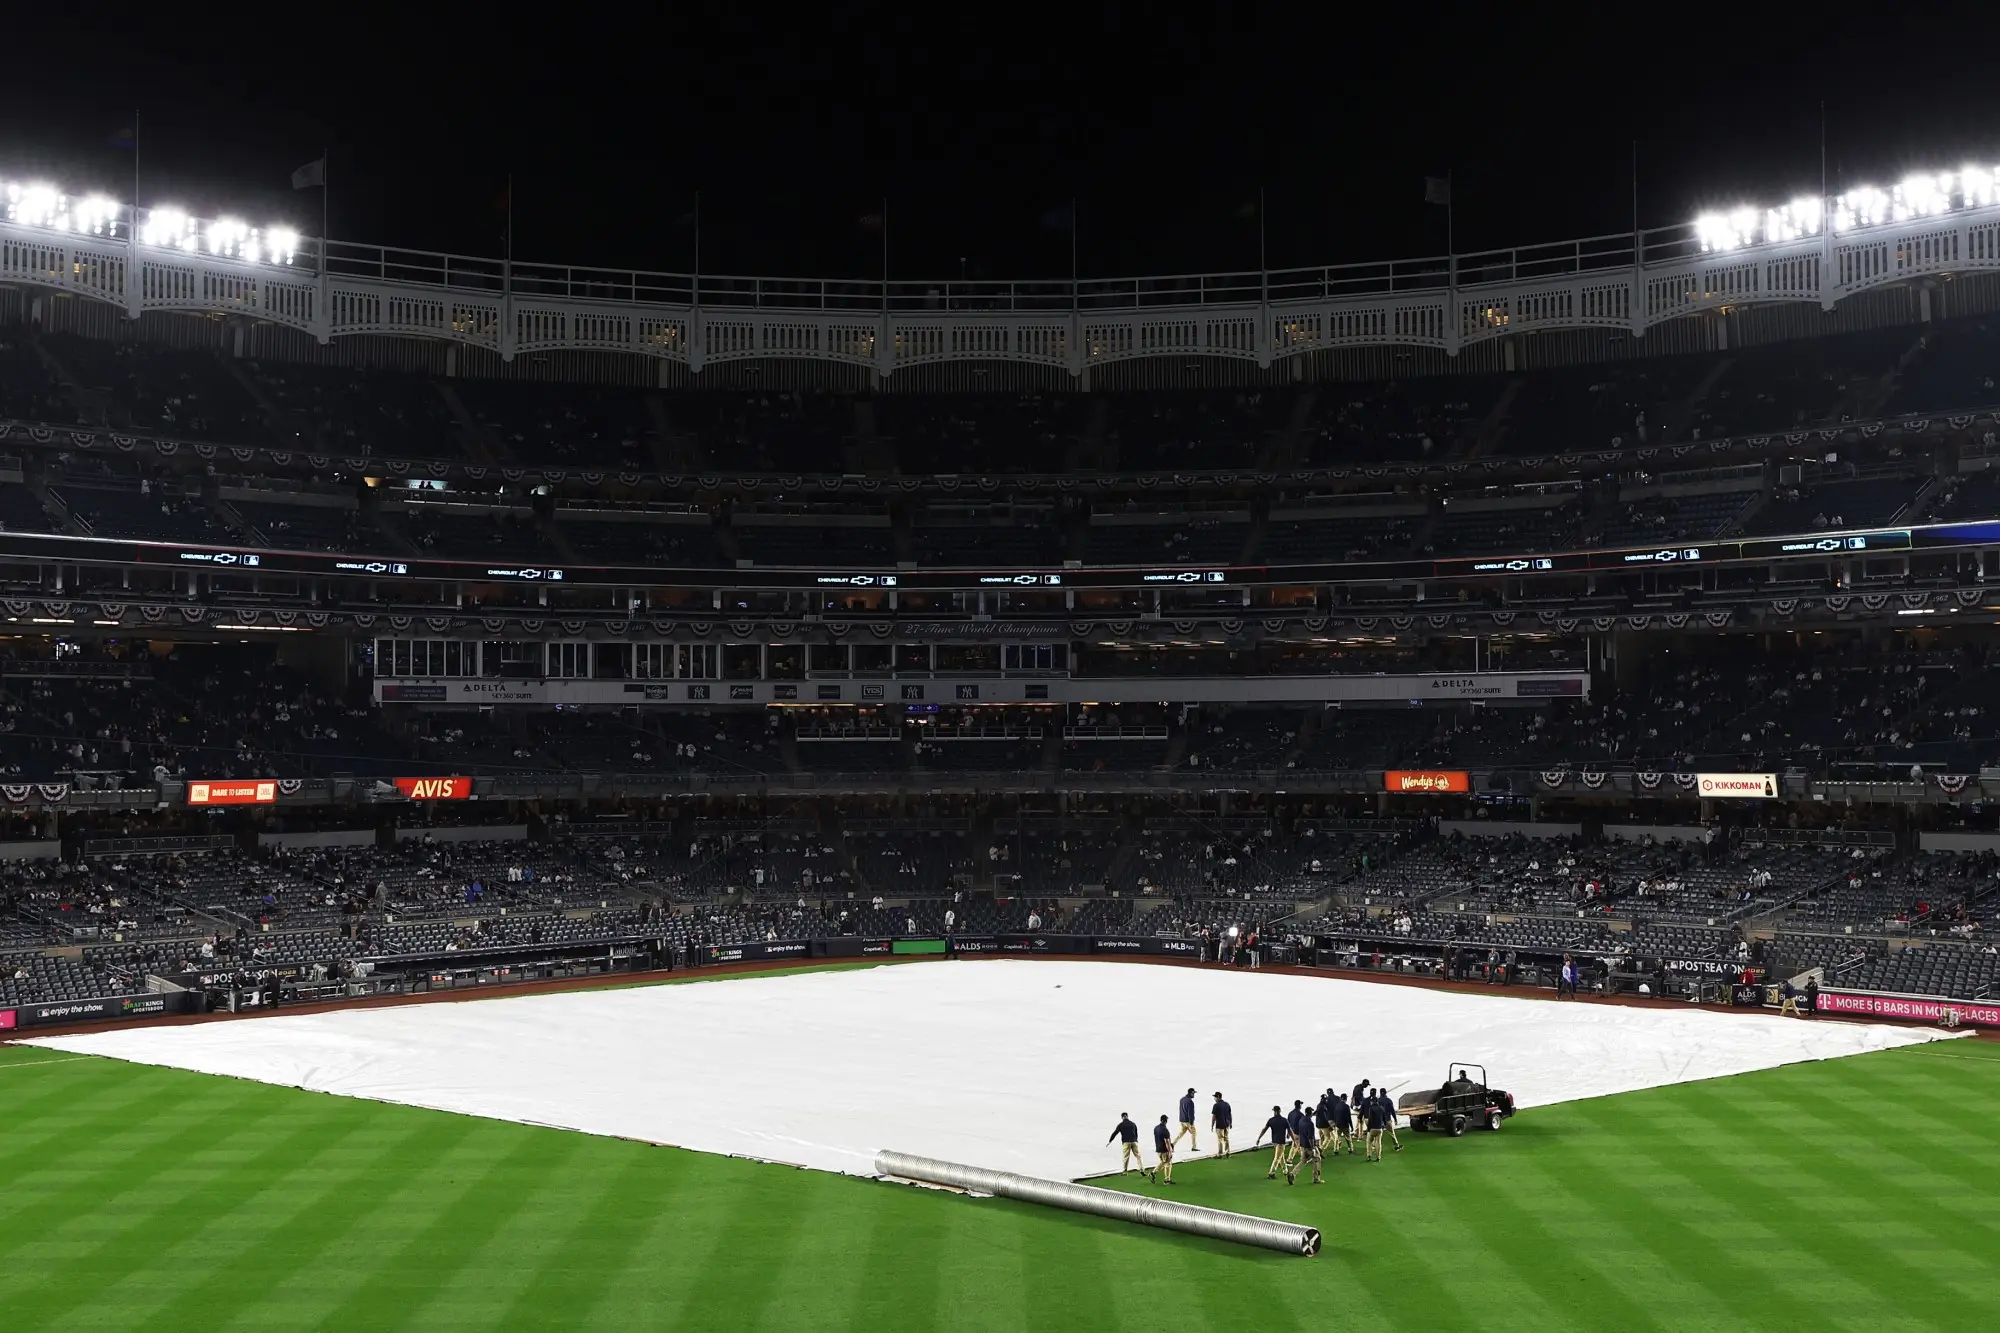 New York Yankees: jogo de baseball em Nova York - VPD Nova York